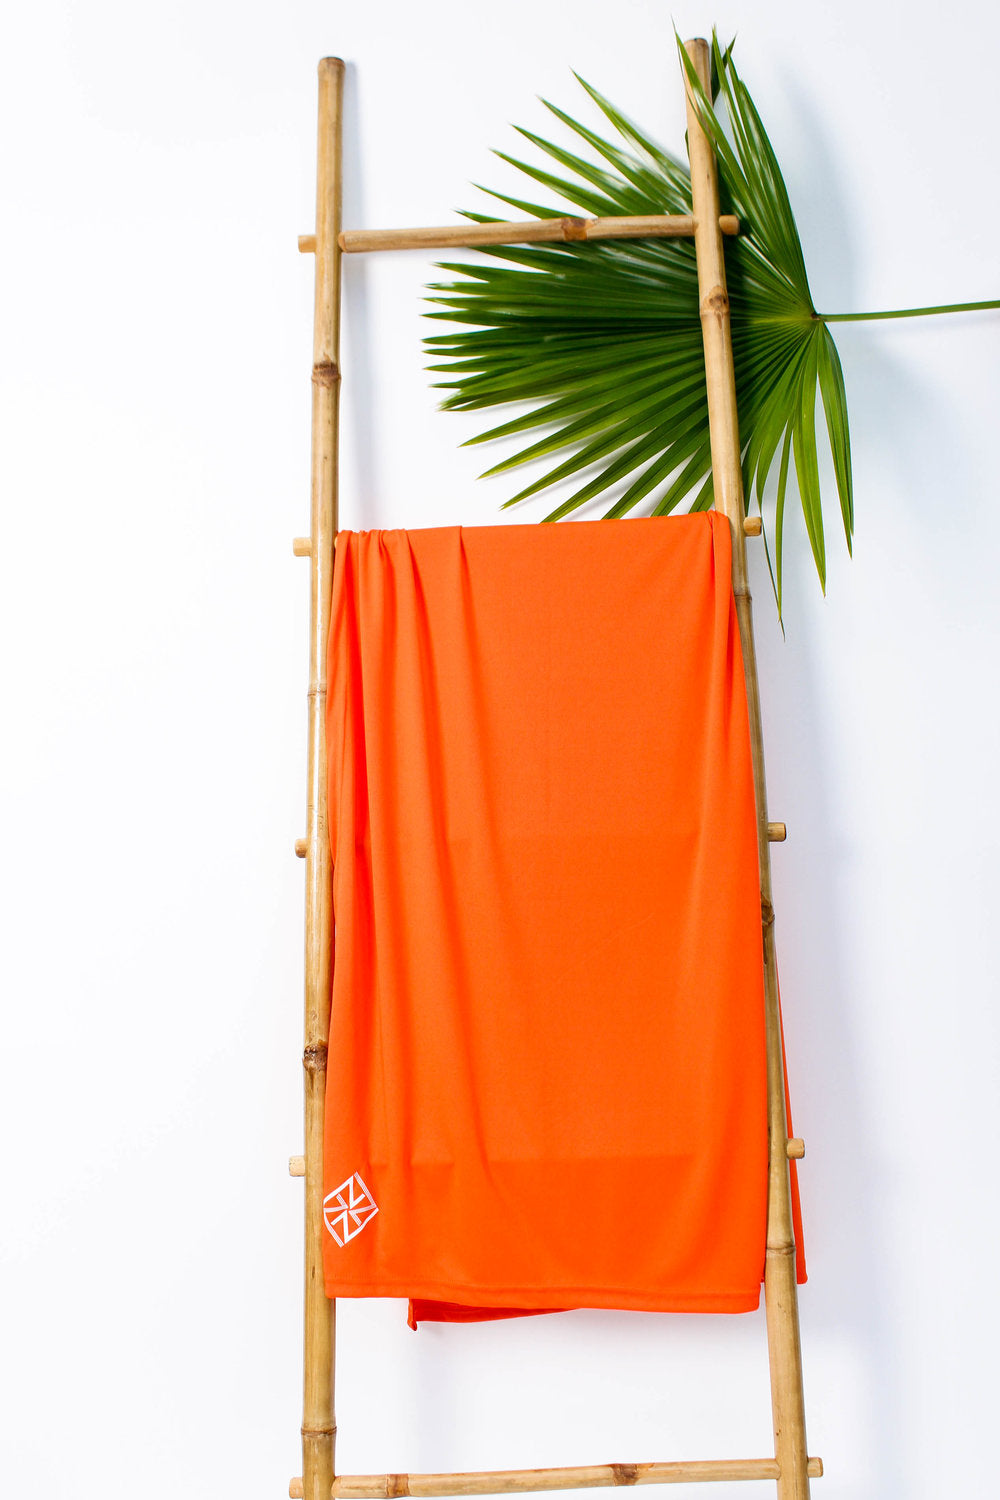 Summer Sunset Orange Blanket